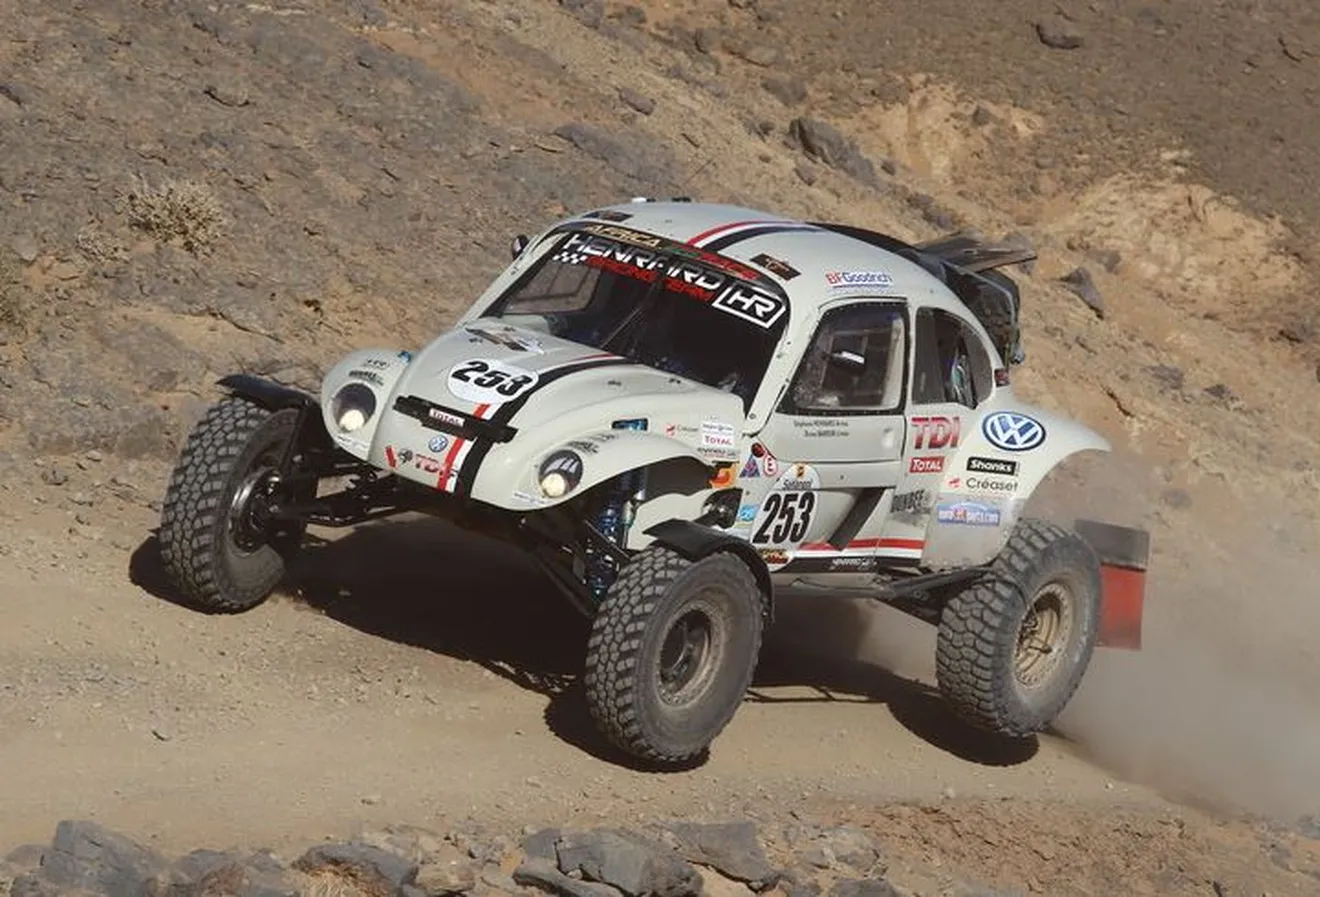 Al Rally Dakar 2015 con un VW Beetle escarabajo